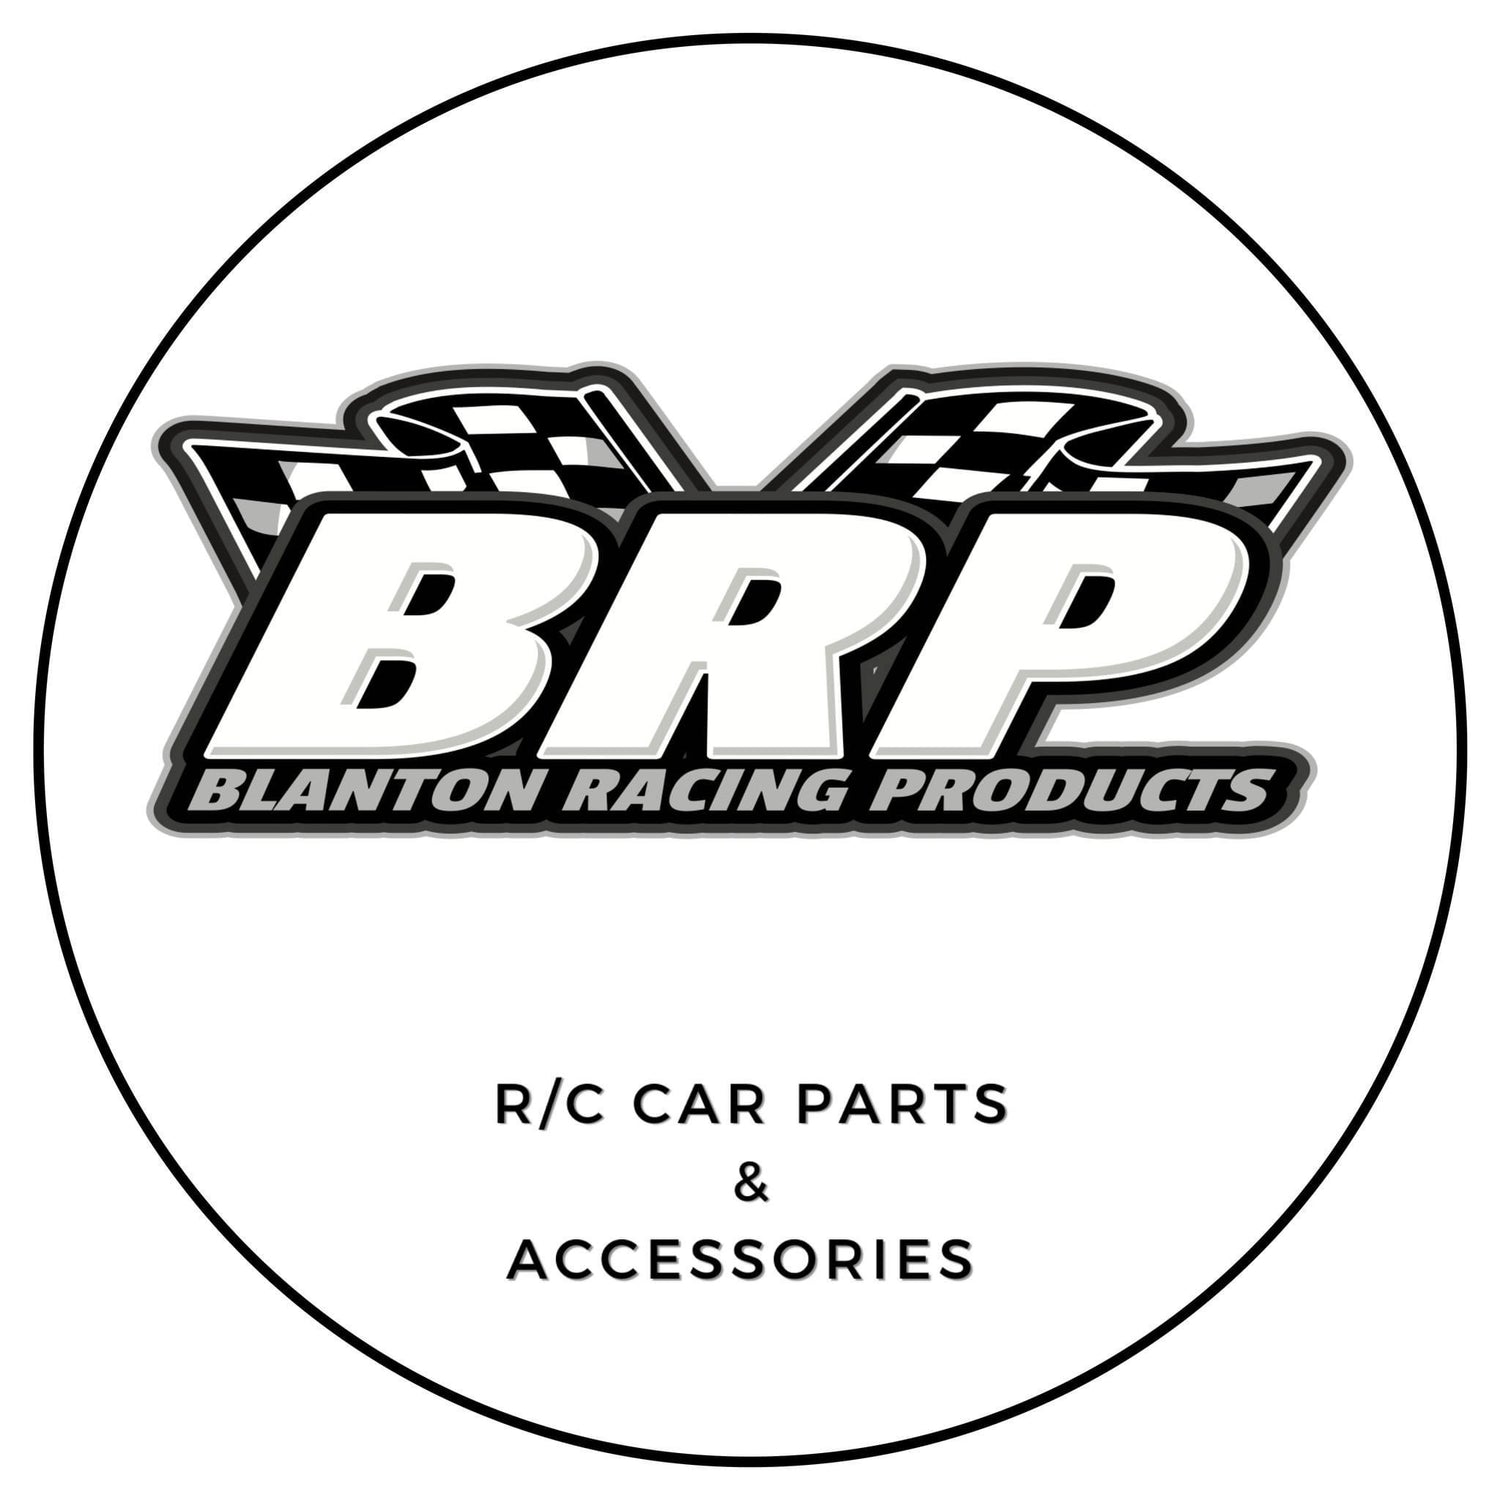 Blanton Racing Products